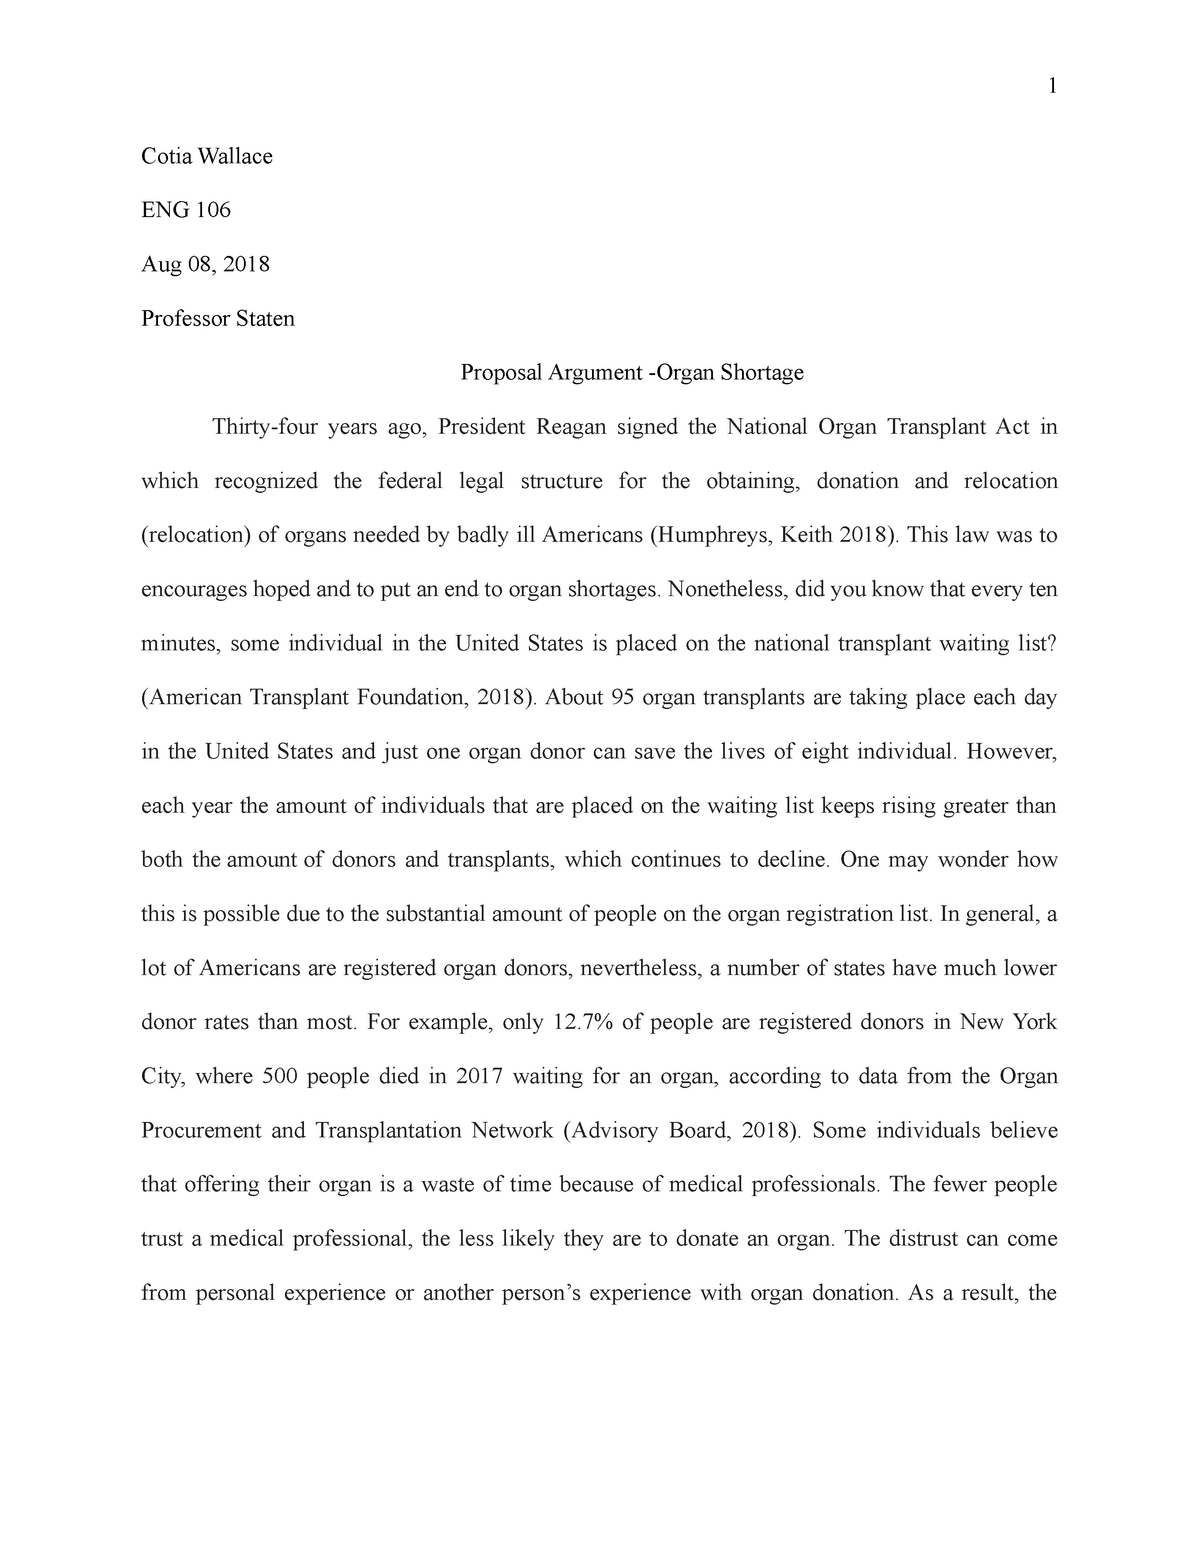 proposal argument essay assignment